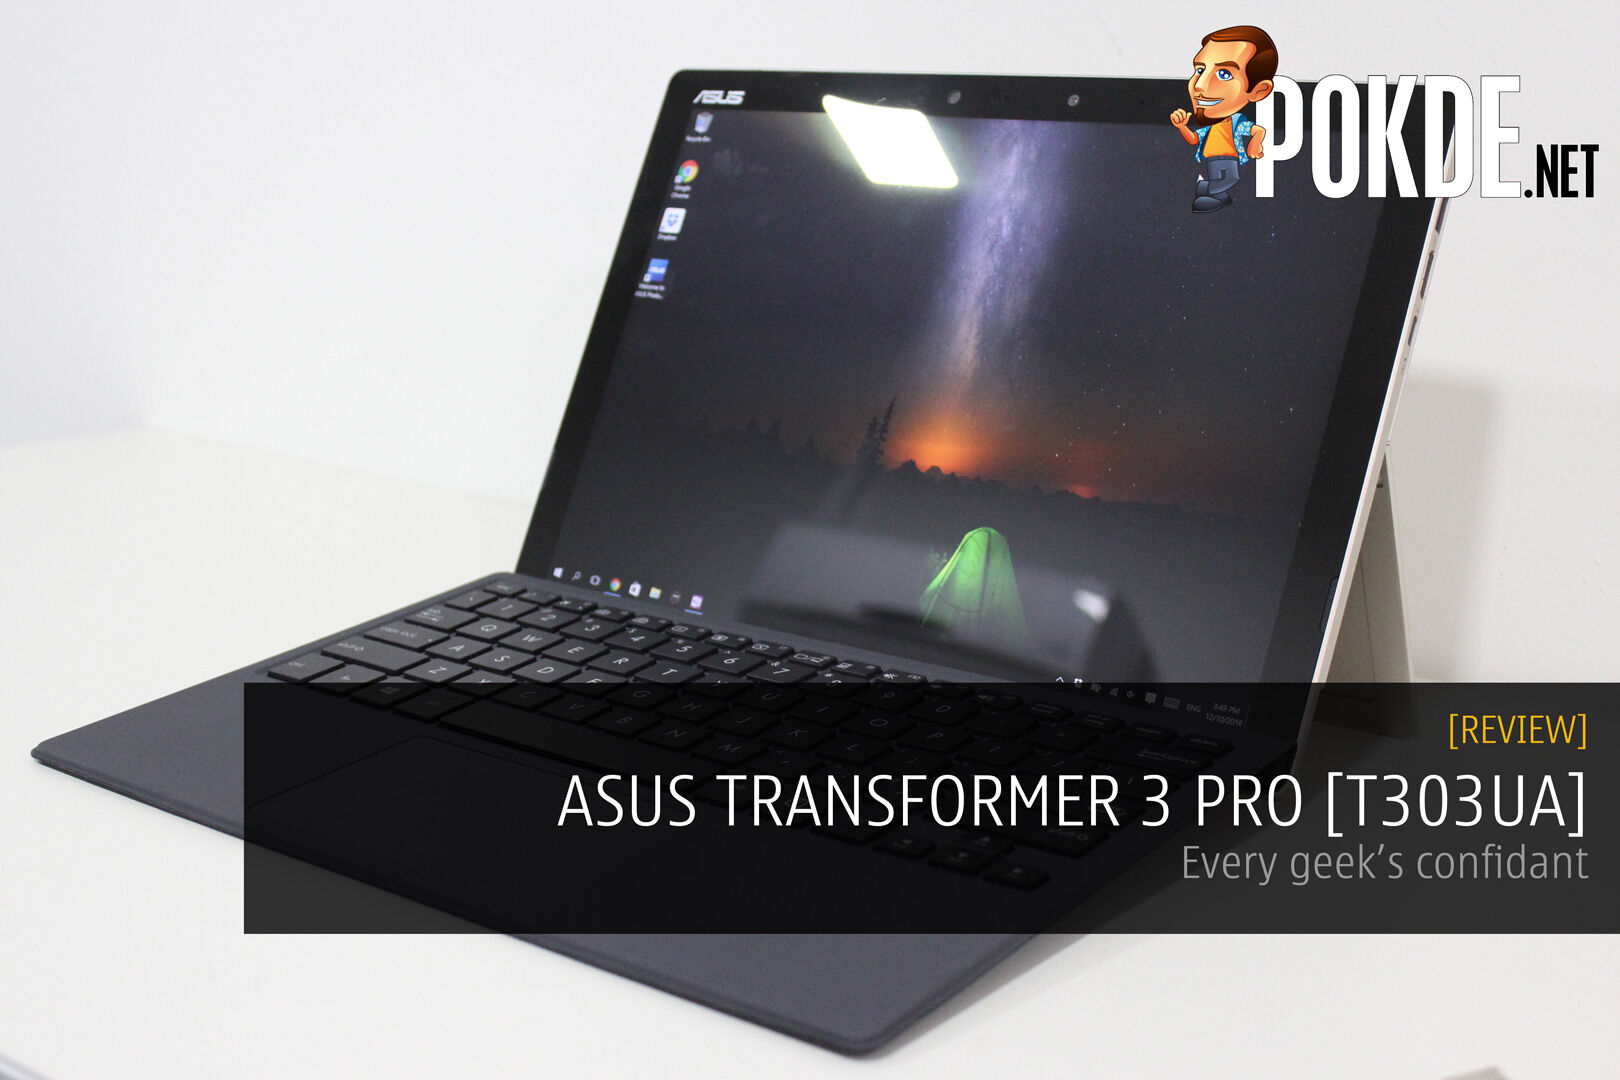 Asus Transformer 3 Pro review [T303UA] - Every geeks confidant 23